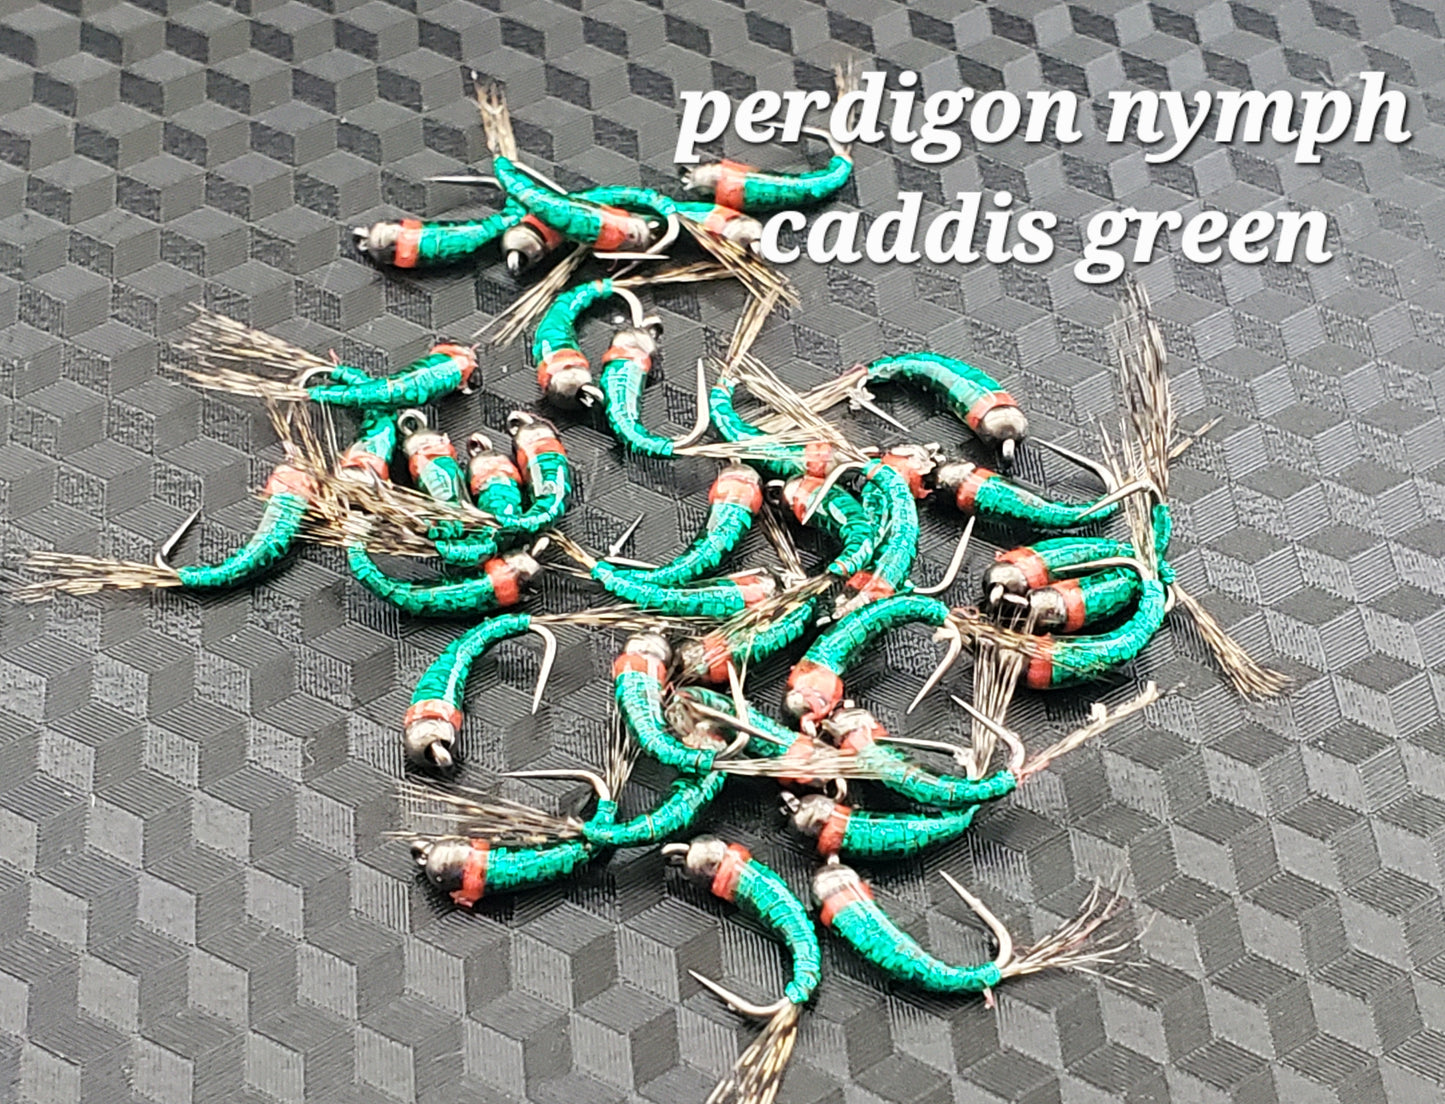 Tungsten Bead Perdigon Nymph, Tungsten Perdigon Nymph, Perdigon Nymph Caddis Green